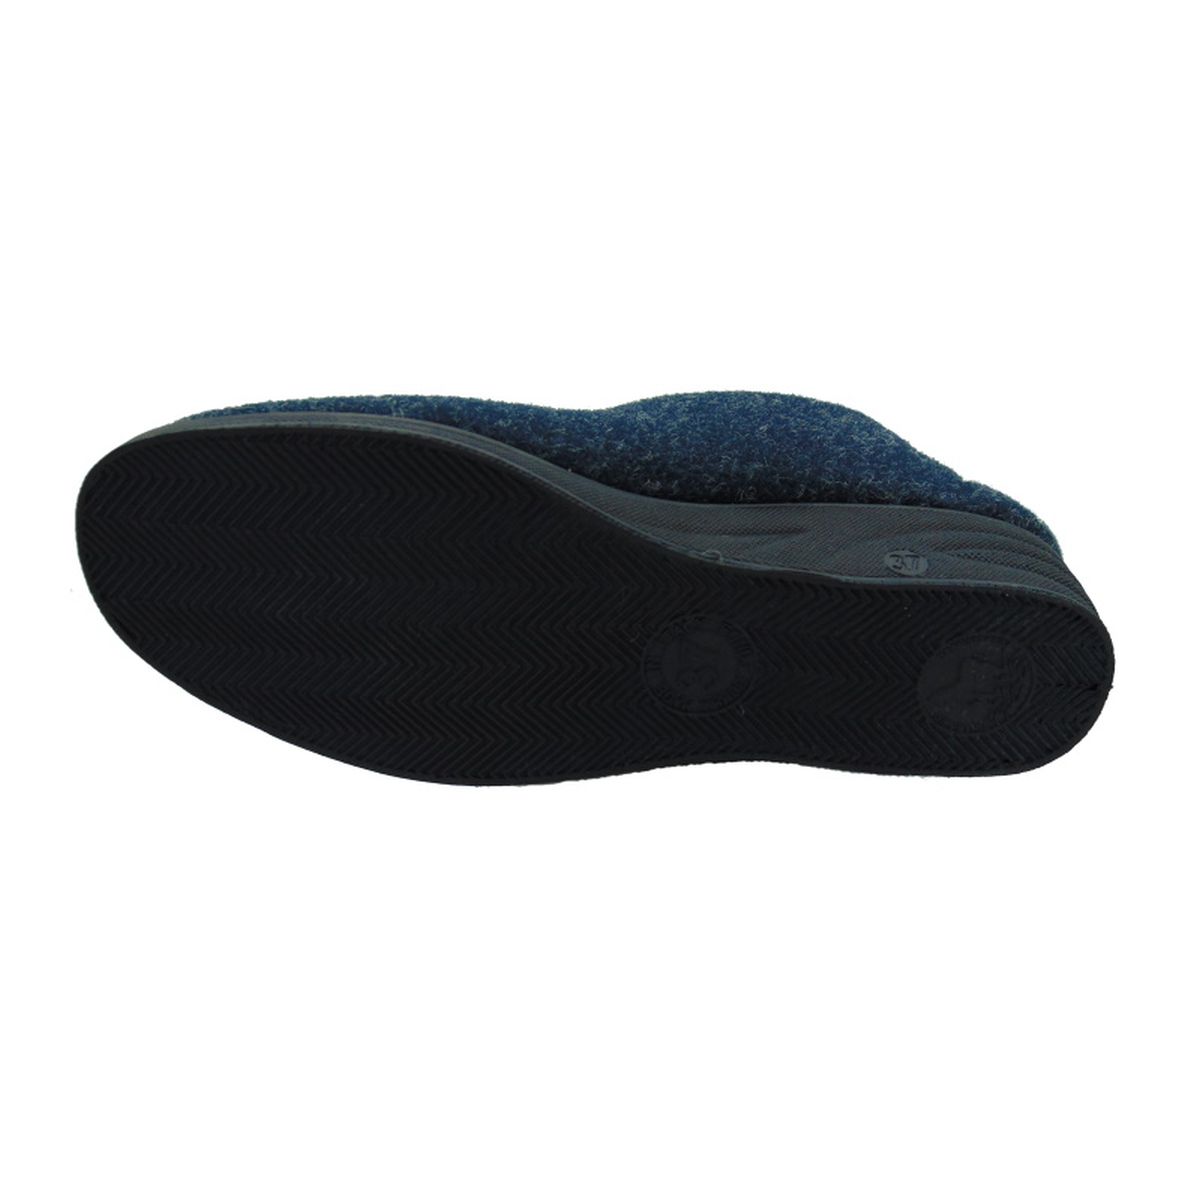 Pantofola Donna, interno lana, Emanuela 509 Blu